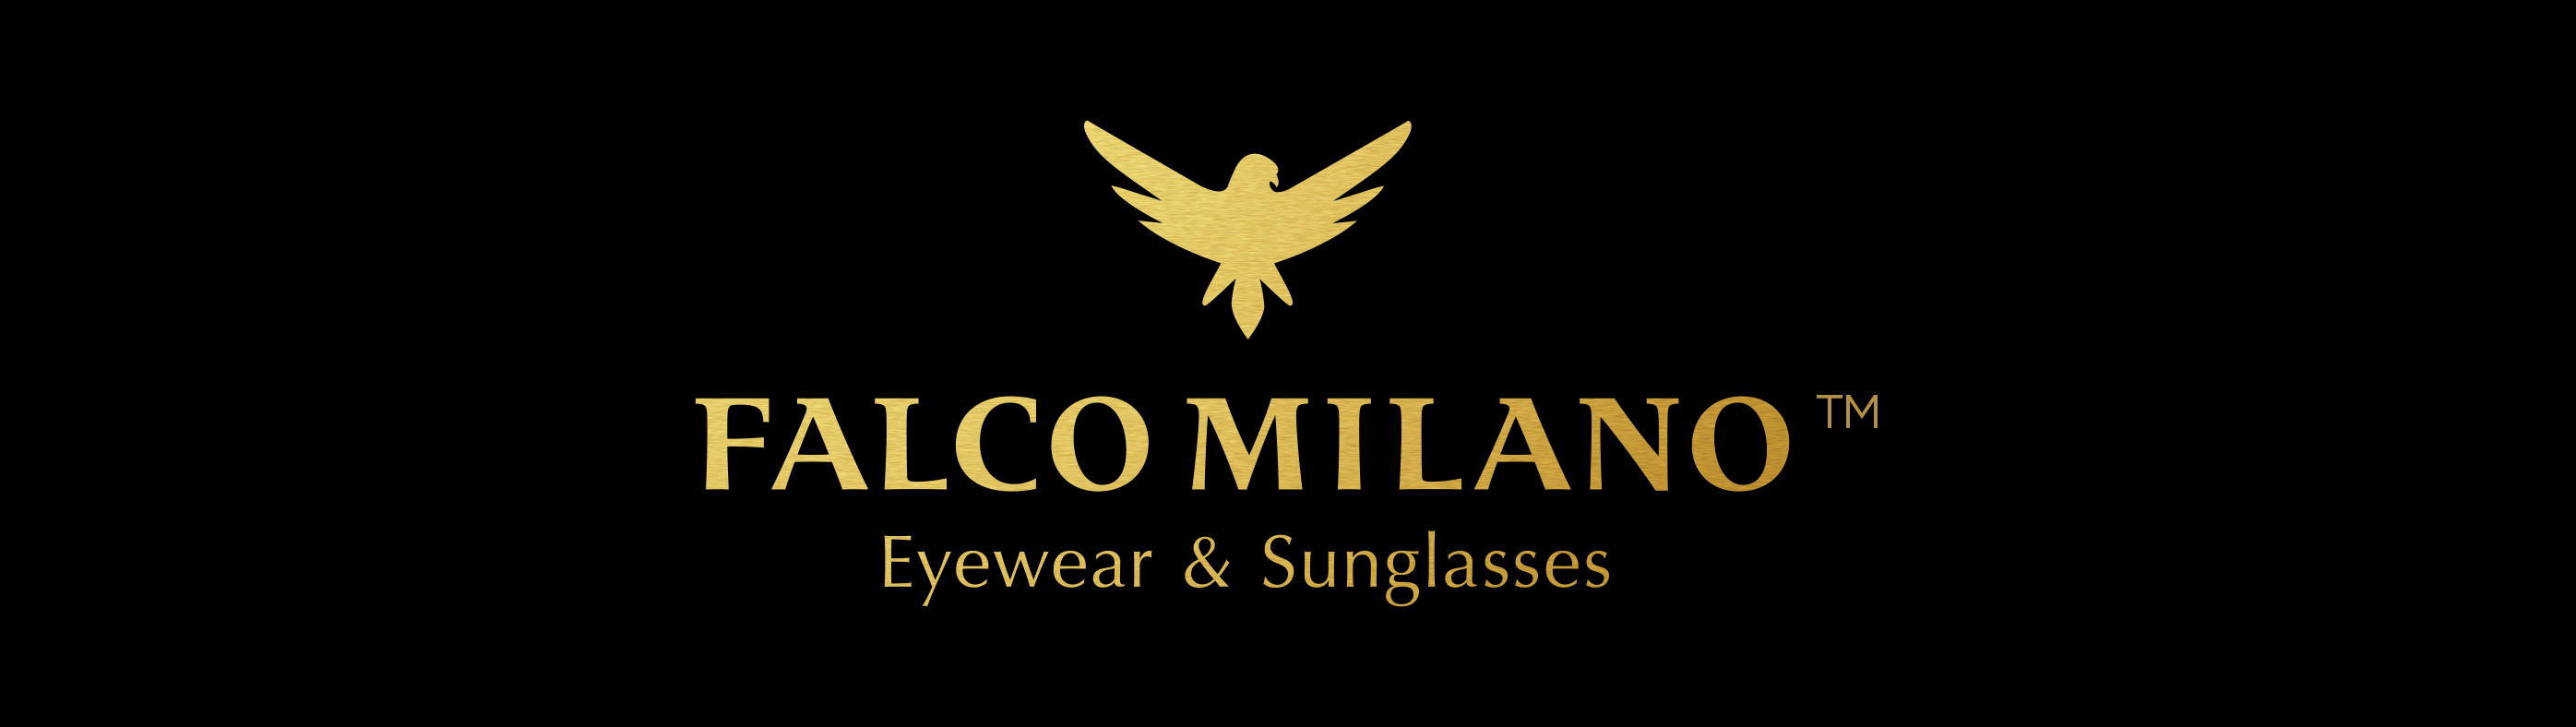 Falco Milano – Eyewear & Sunglasses